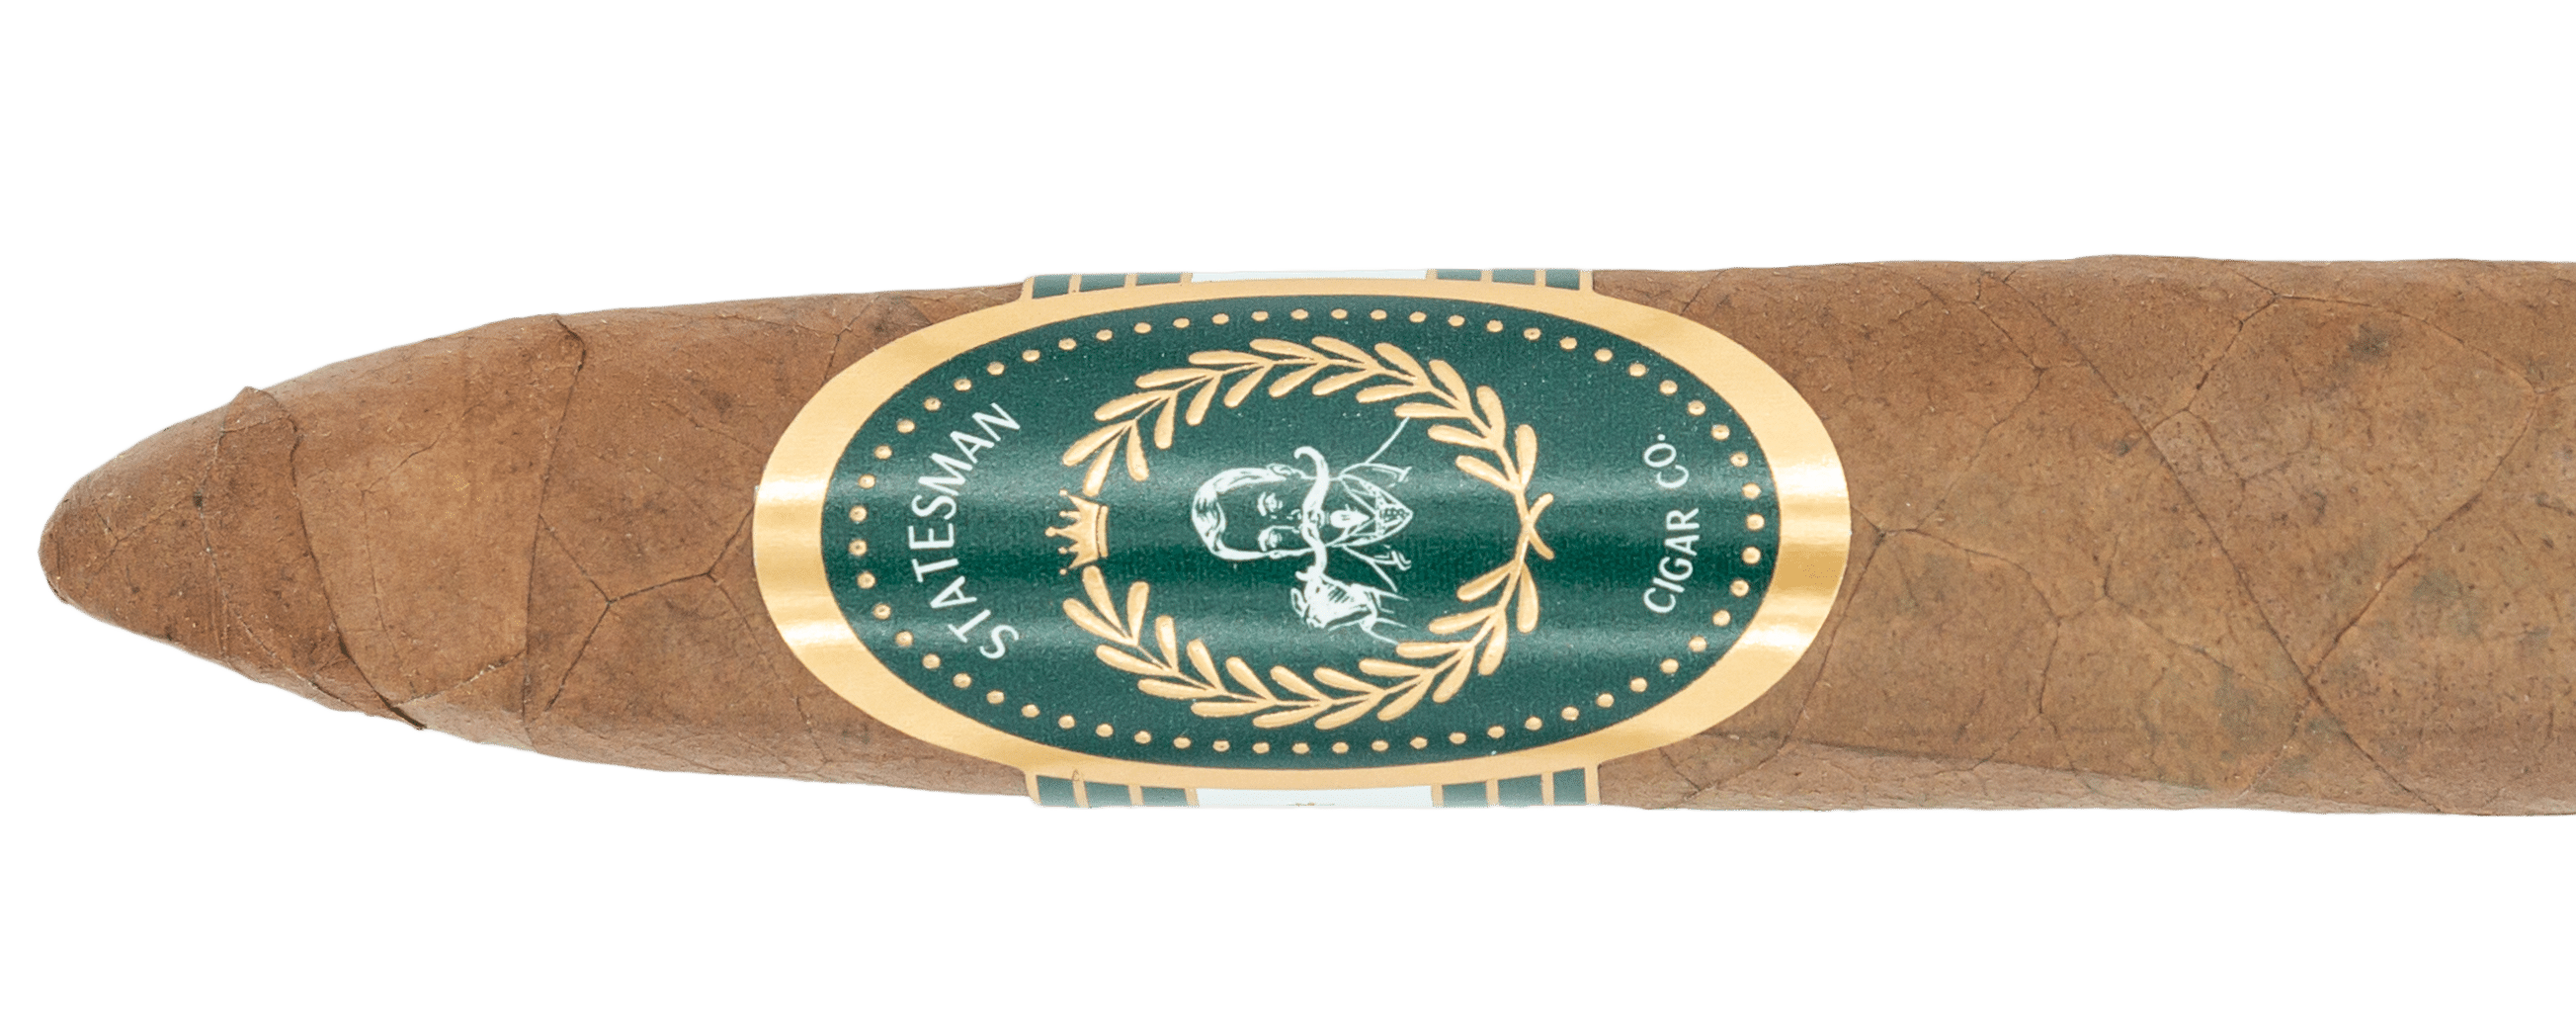 Statesman Cigar Co. The Statesman - Blind Cigar Review